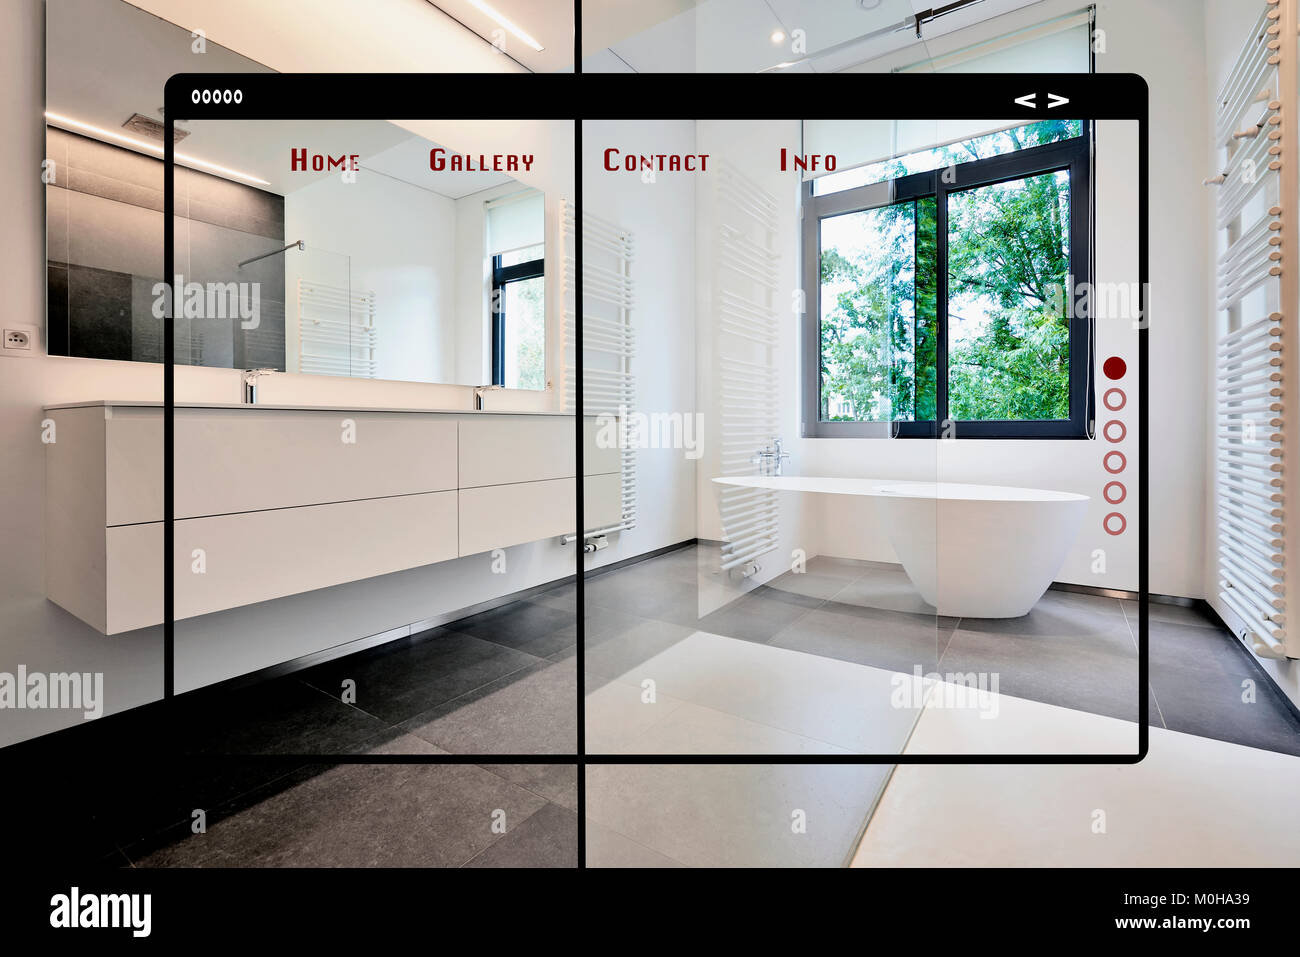 Modern site web interface for gallery. Tiled bathroom with windows towards garden Stock Photo